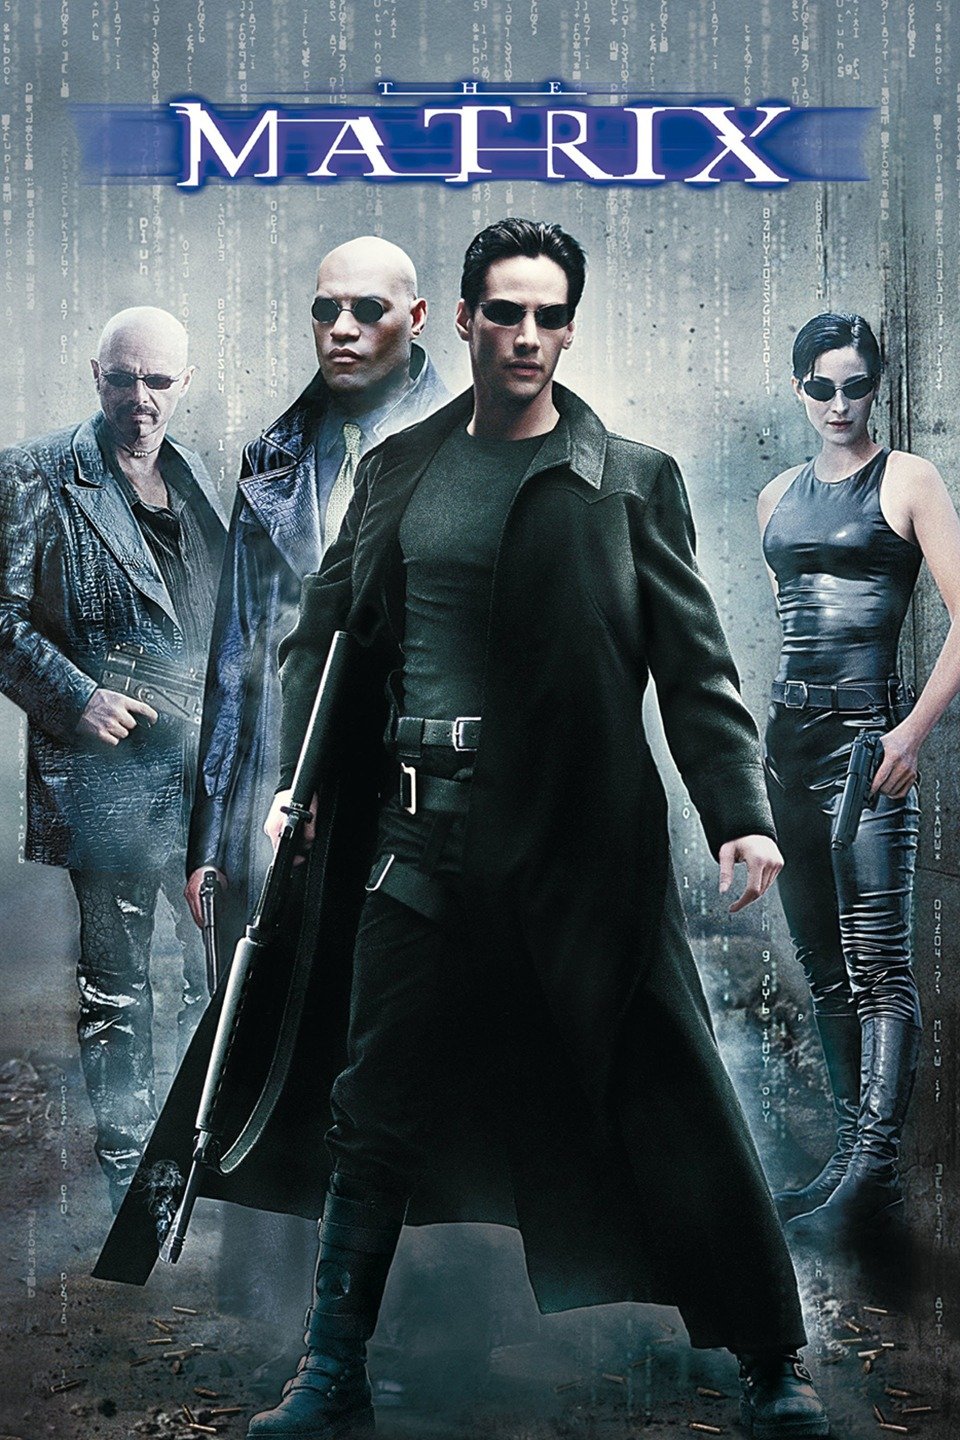 The matrix 1999